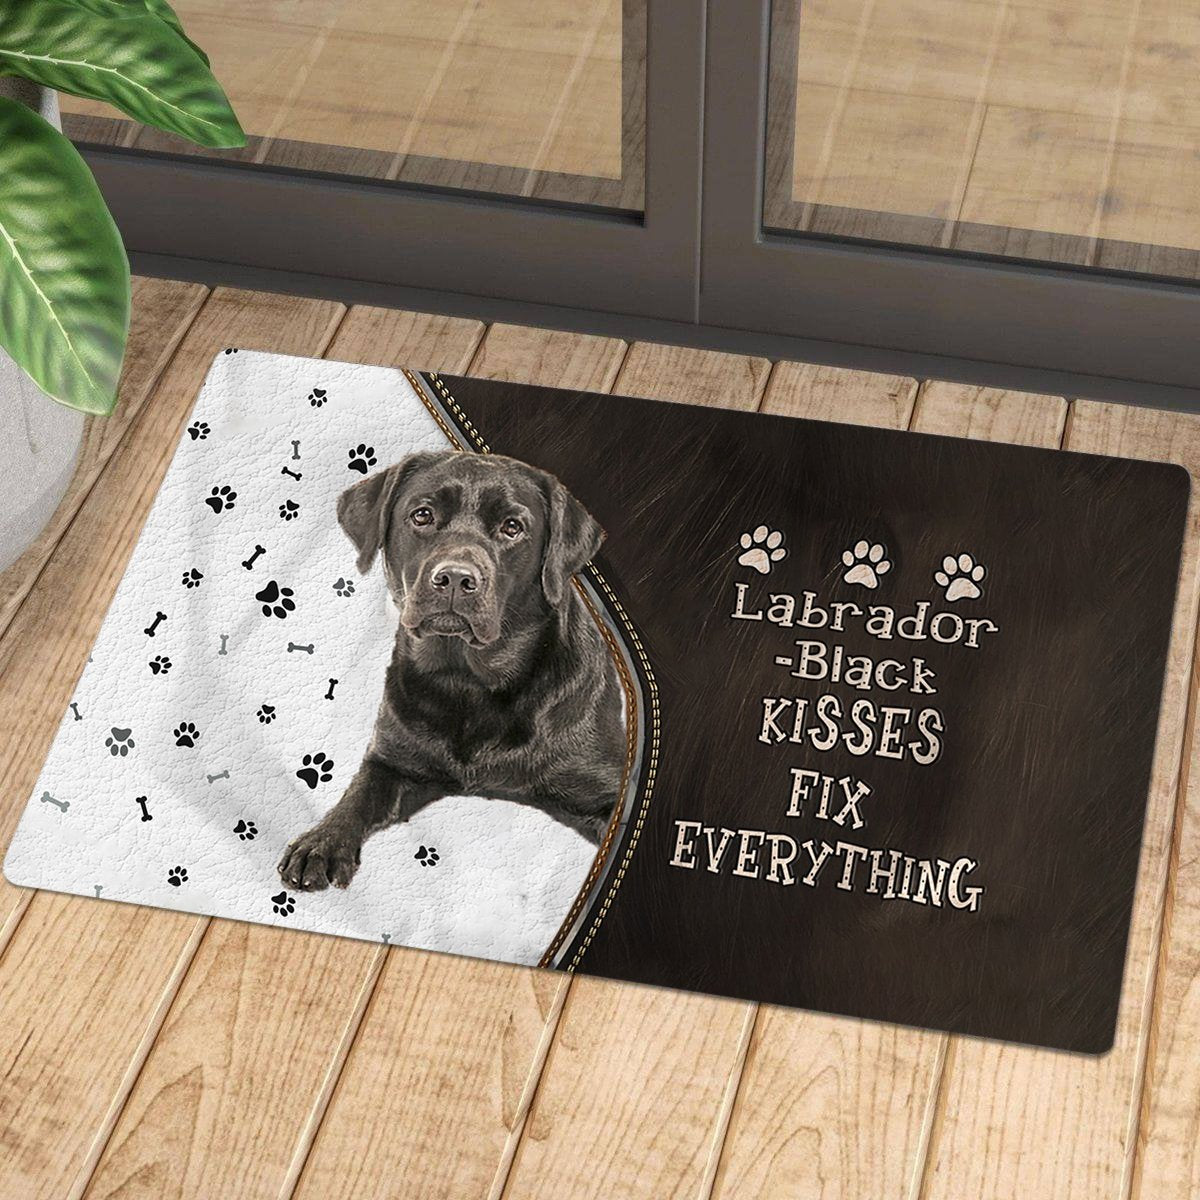 Labrador-Black Kisses Fix Everything Doormat